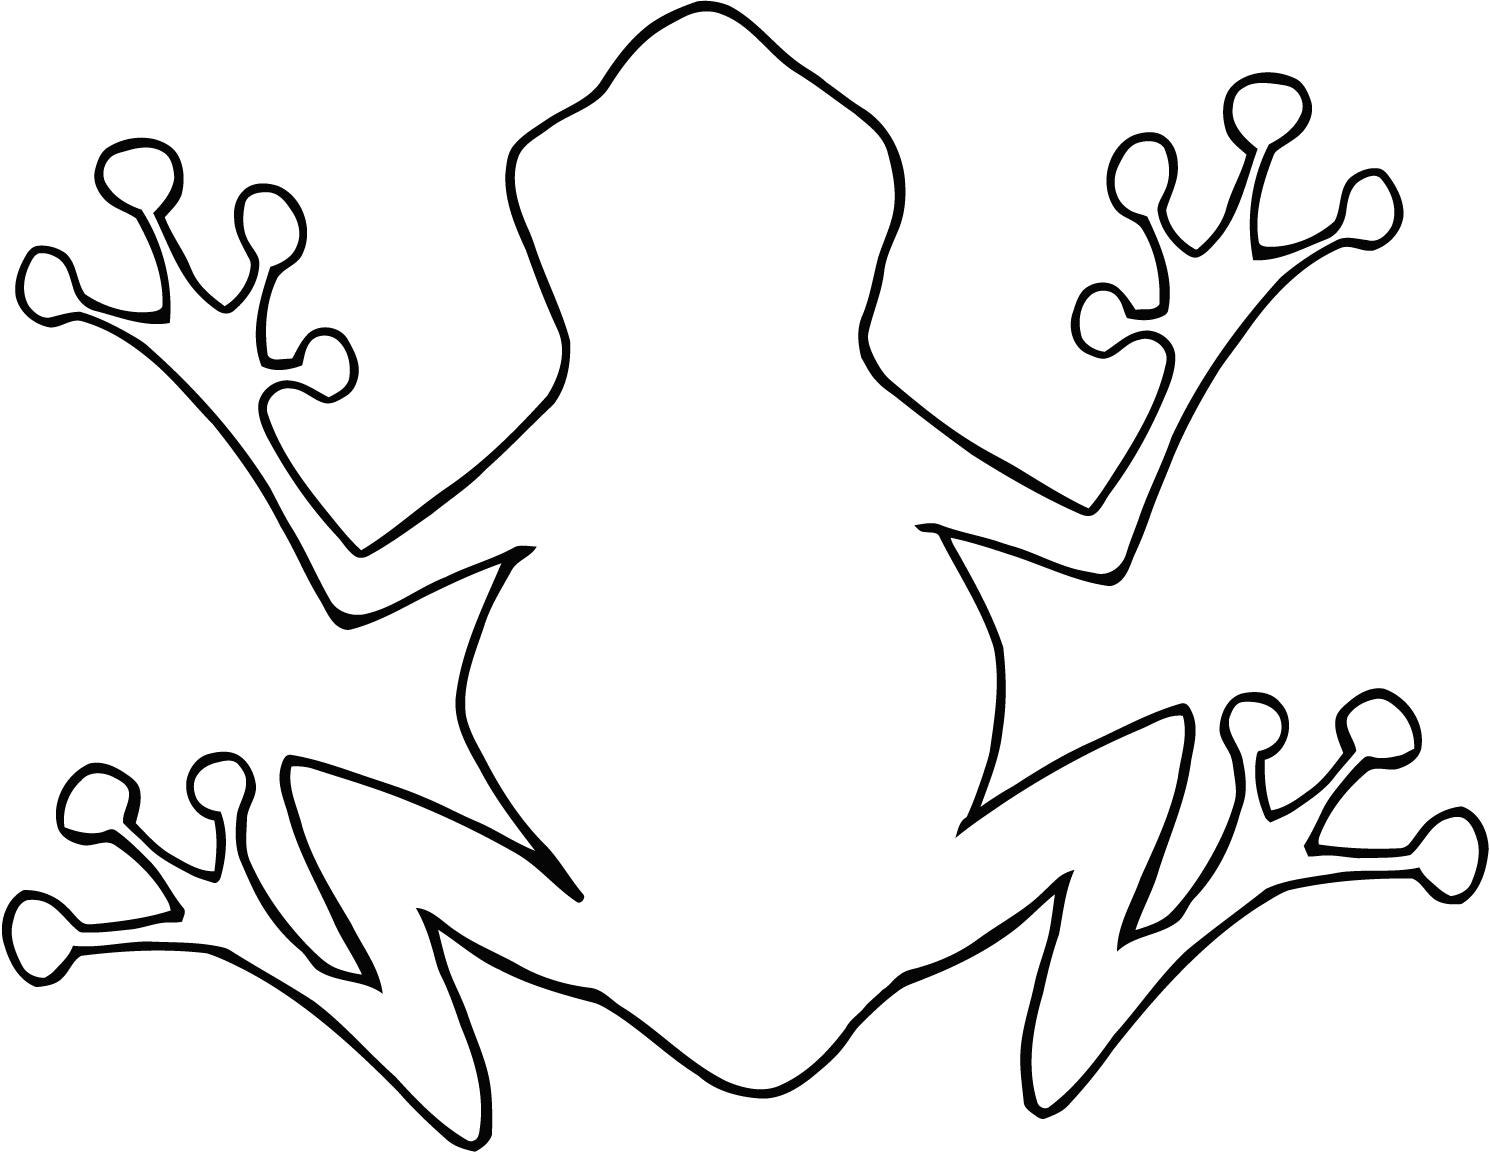 Tree Frog Outline.